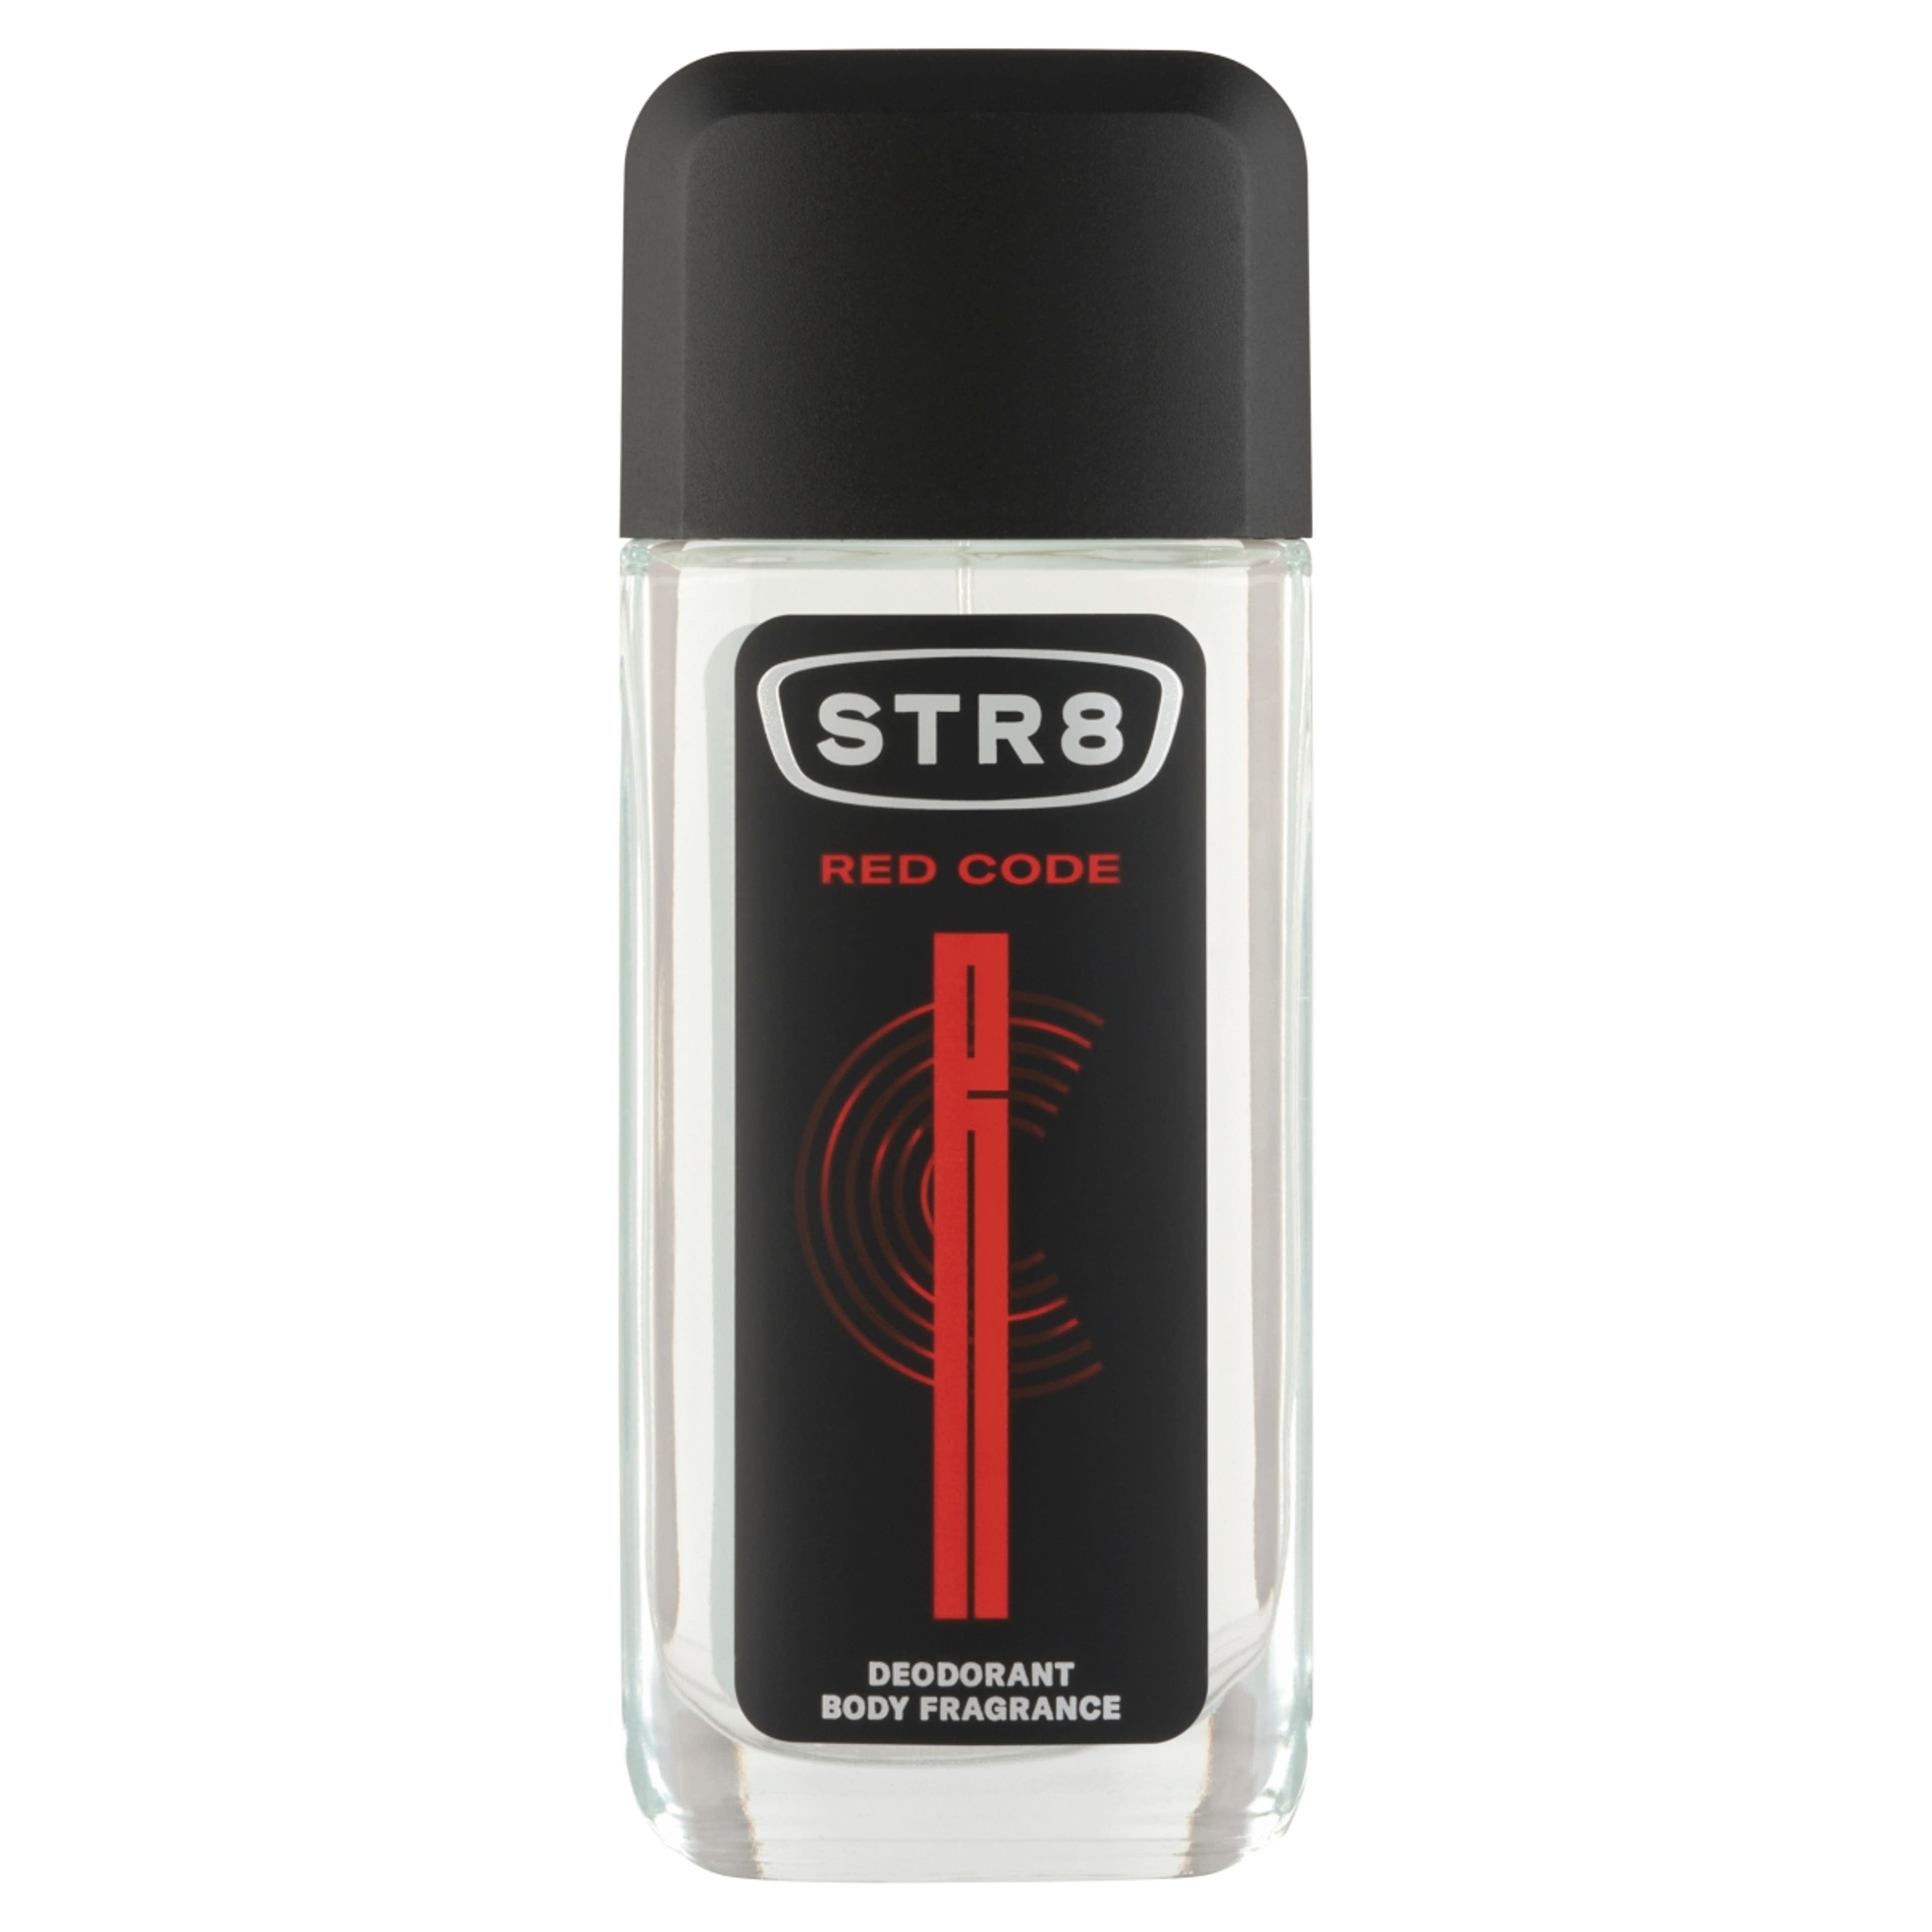 STR8 Red Code Body Fragrance parfüm spray - 85 ml-1